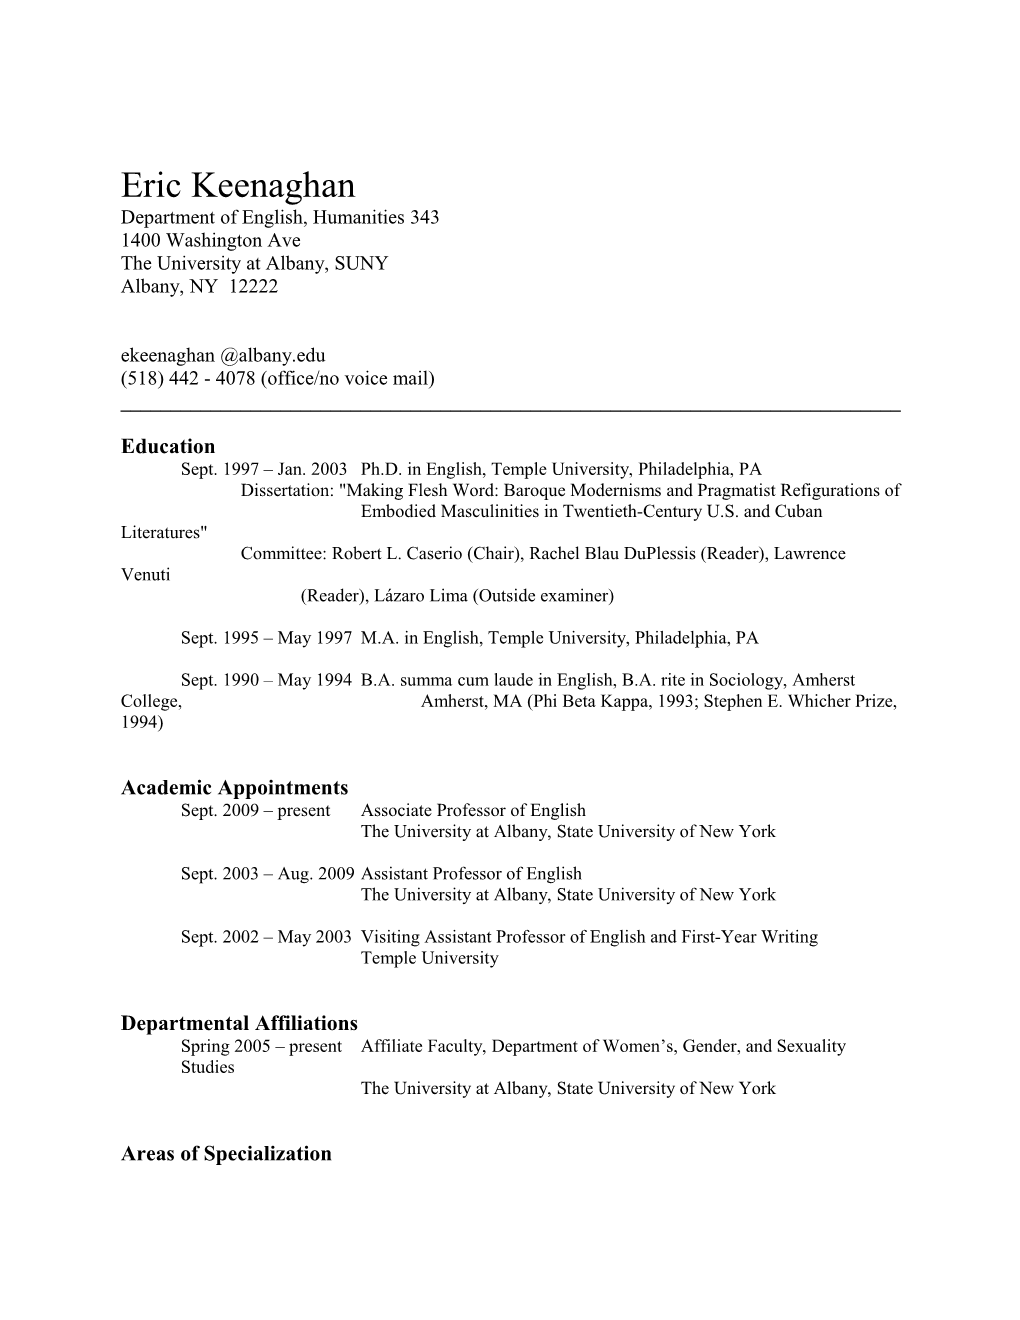 Eric Keenaghan Vita (Updated August 13, 2015)